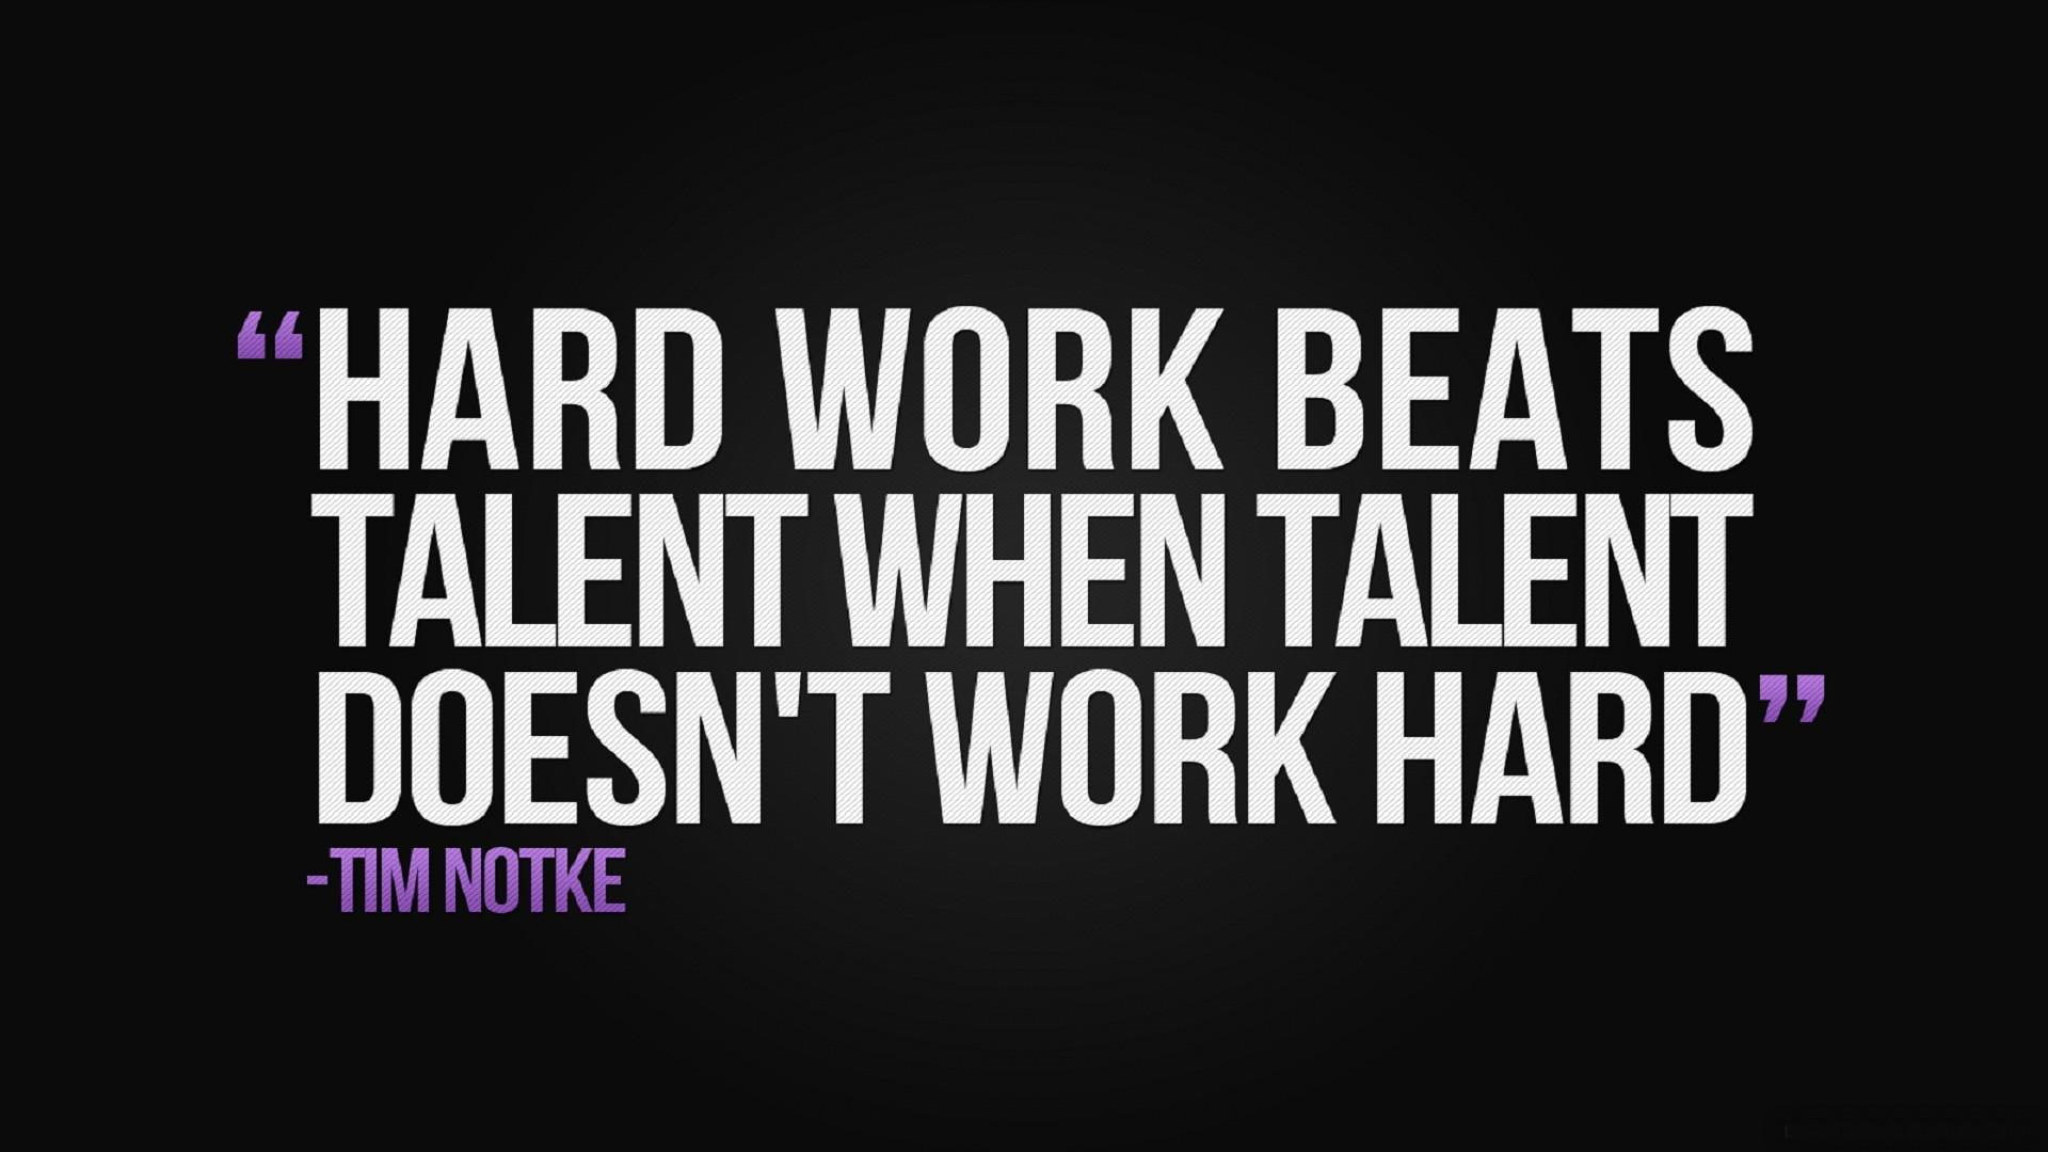 Tim Notke Quote Wallpaper, Hard Work Beats Talent When Talent Doens't Work Hard • Wallpaper For You